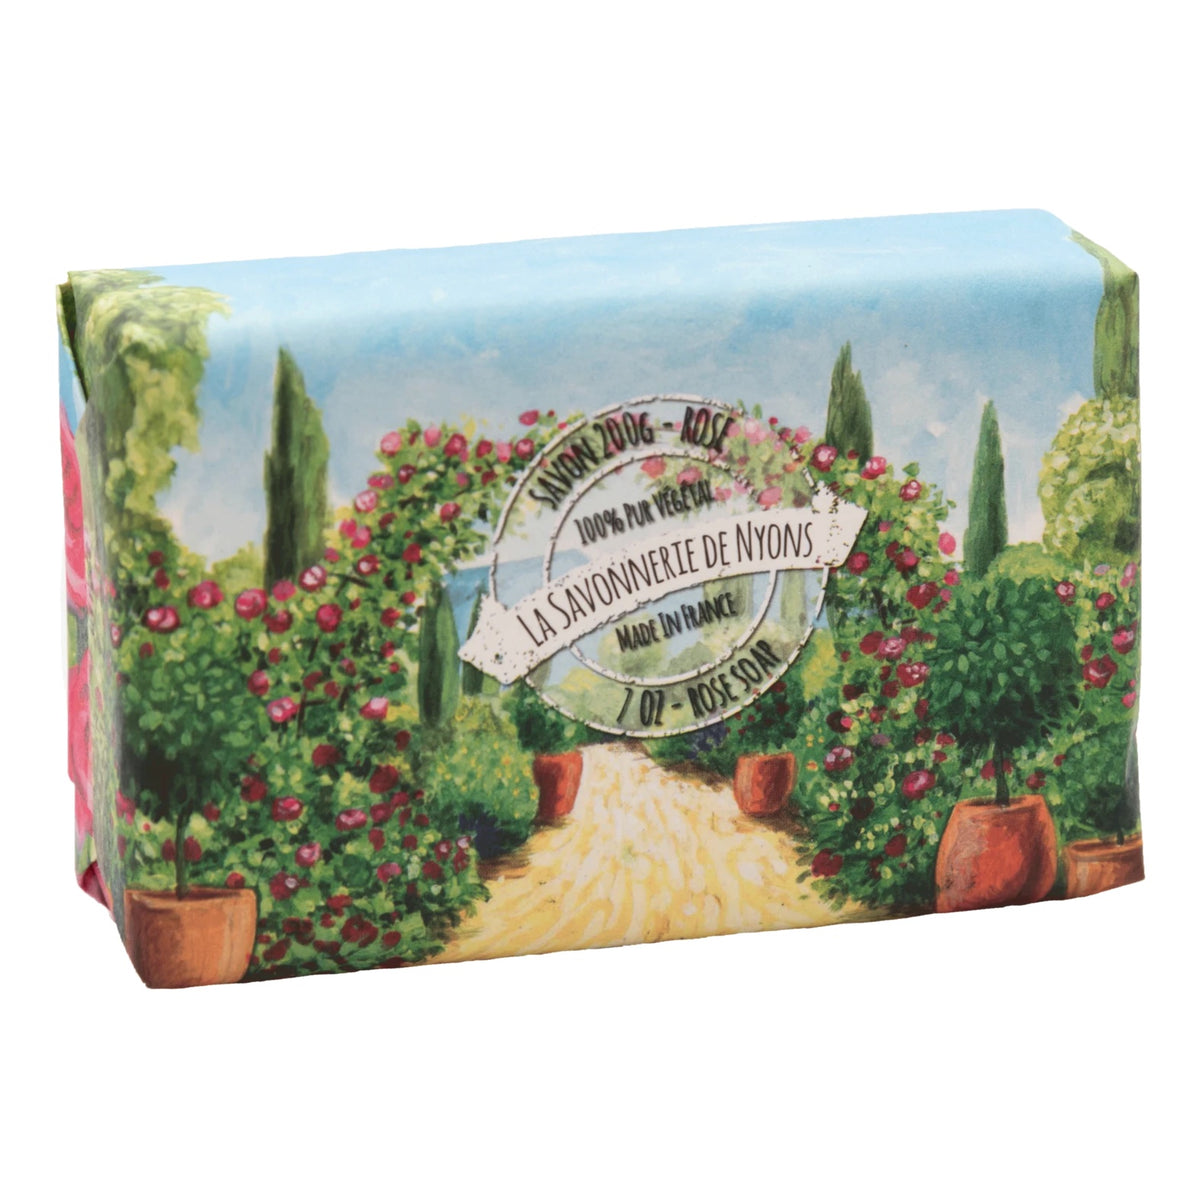 La Savonnerie de Nyons Jardin de Roses (Rose Garden) 200g Soap in Paper